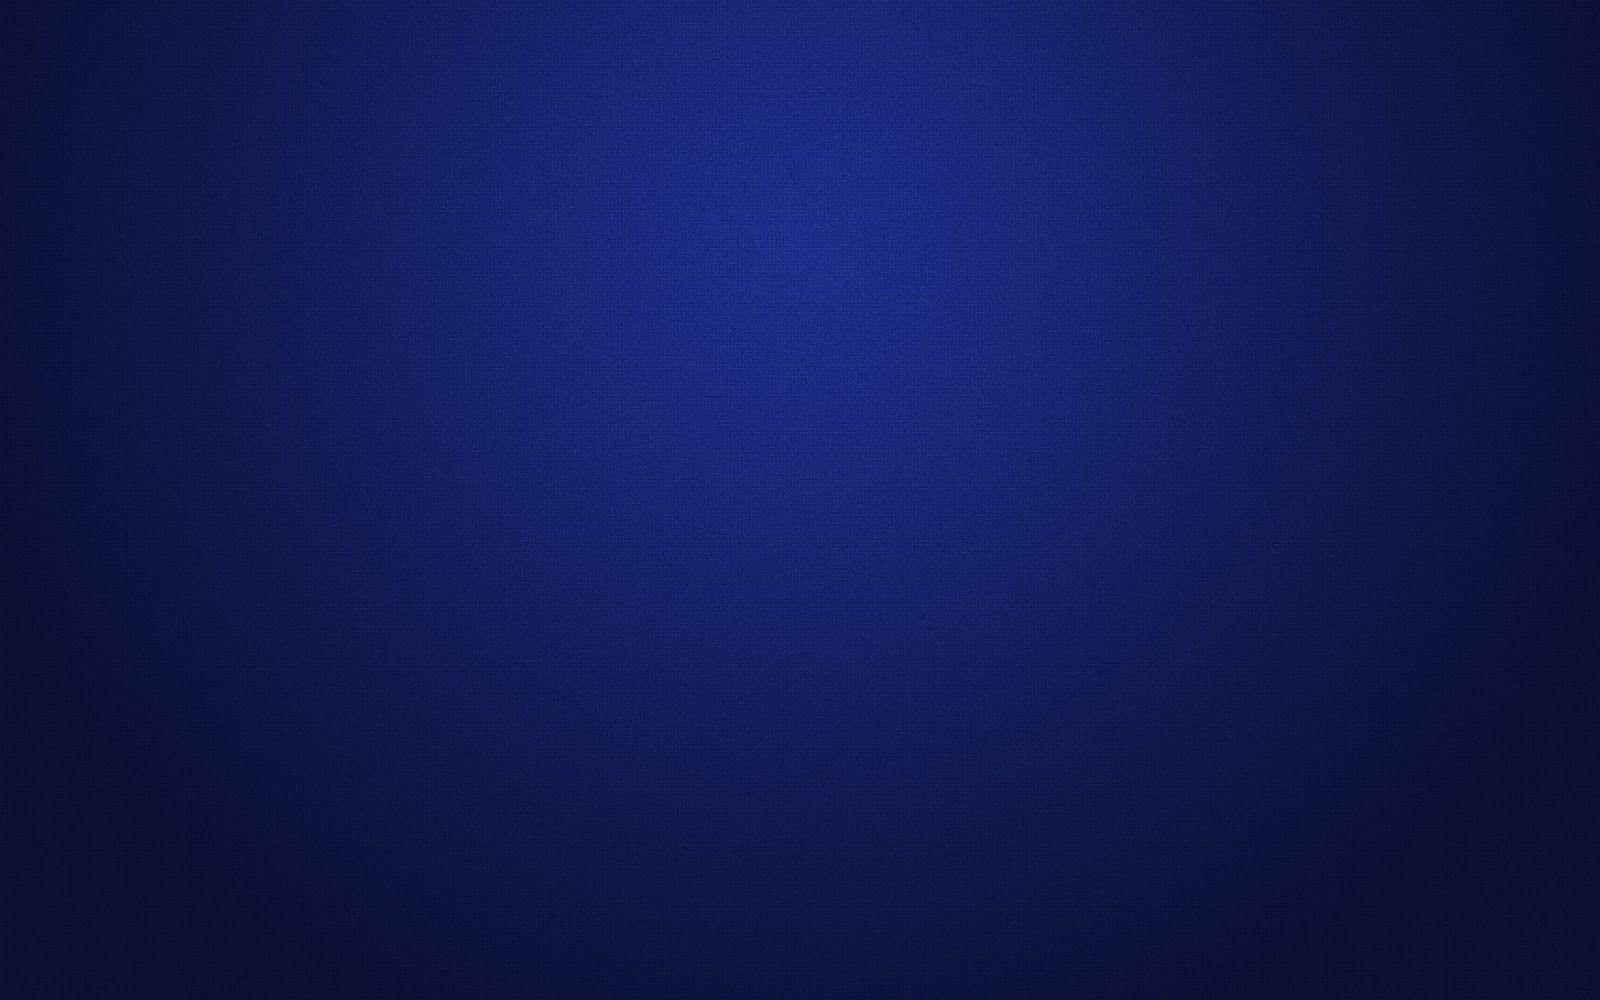 Dark Blue Backgrounds Image - Wallpaper Cave